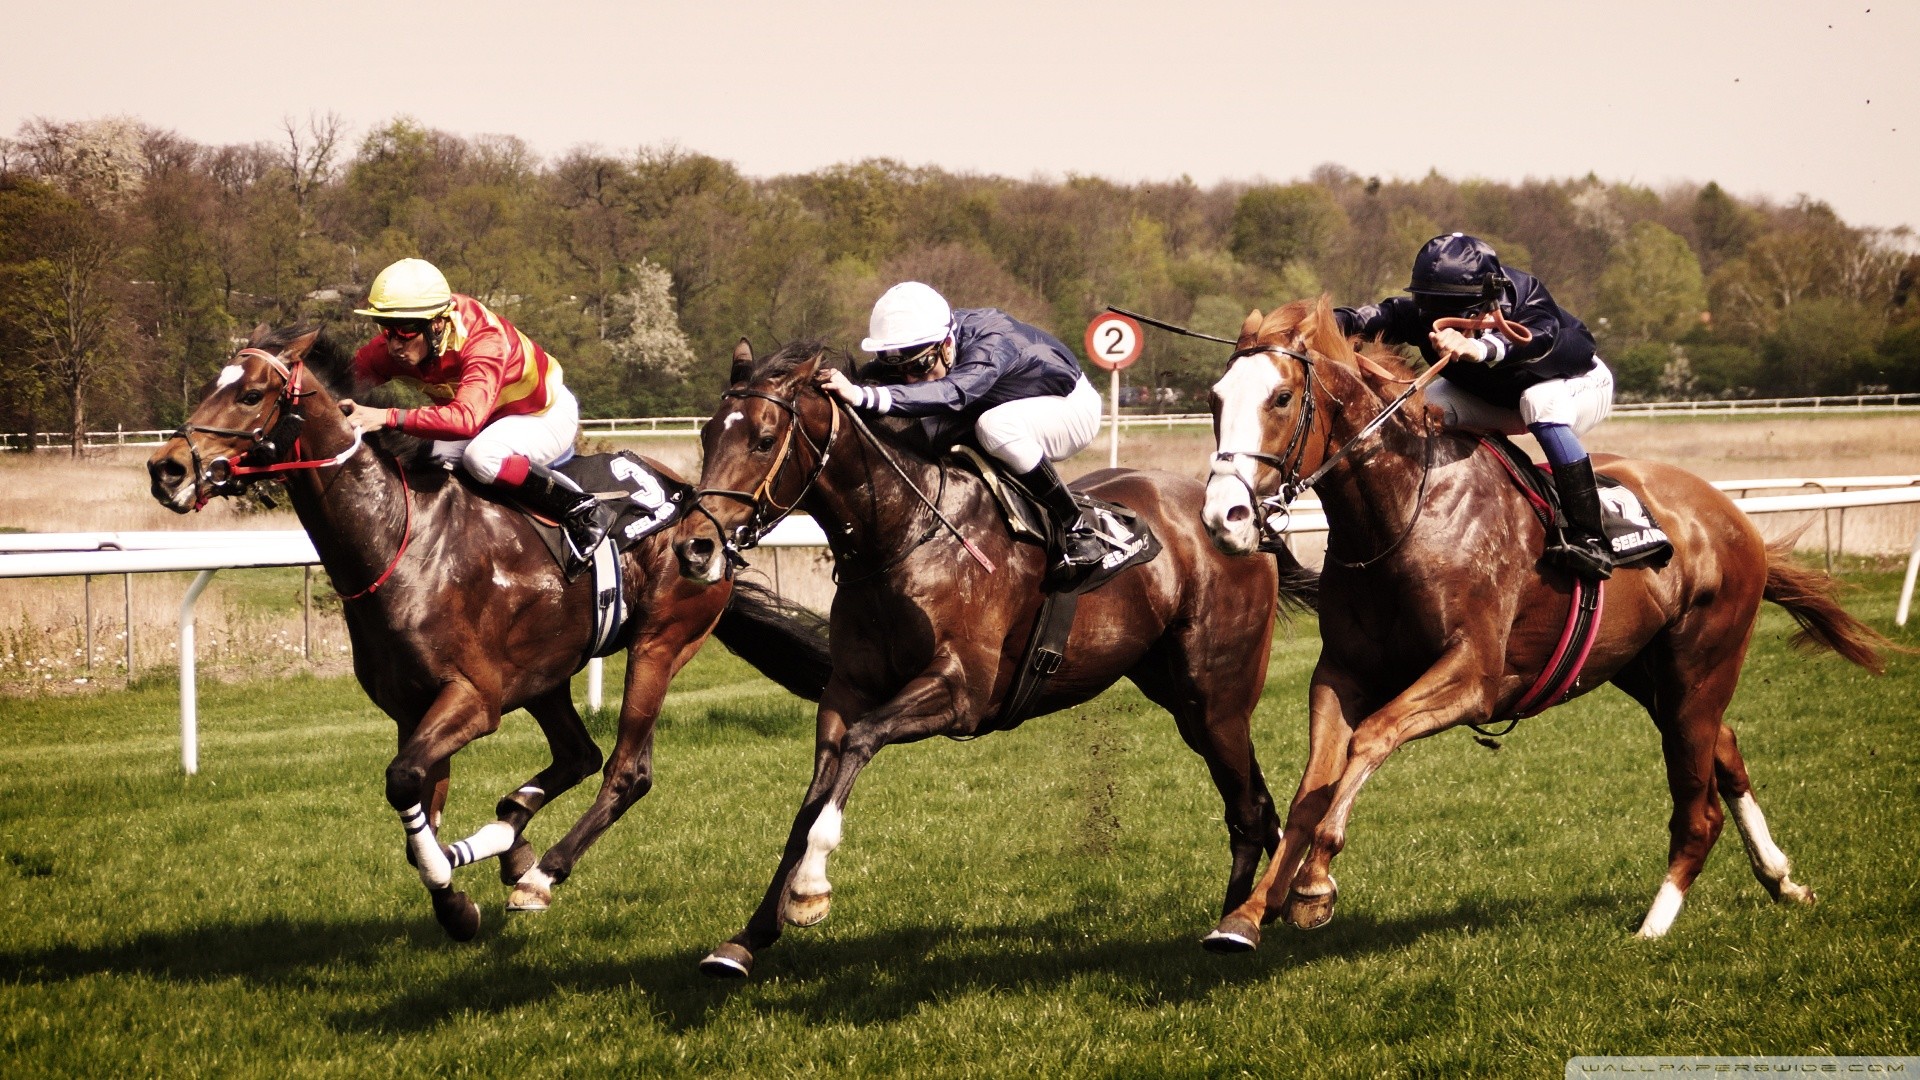 Horses racing - Two beautiful brown horses running